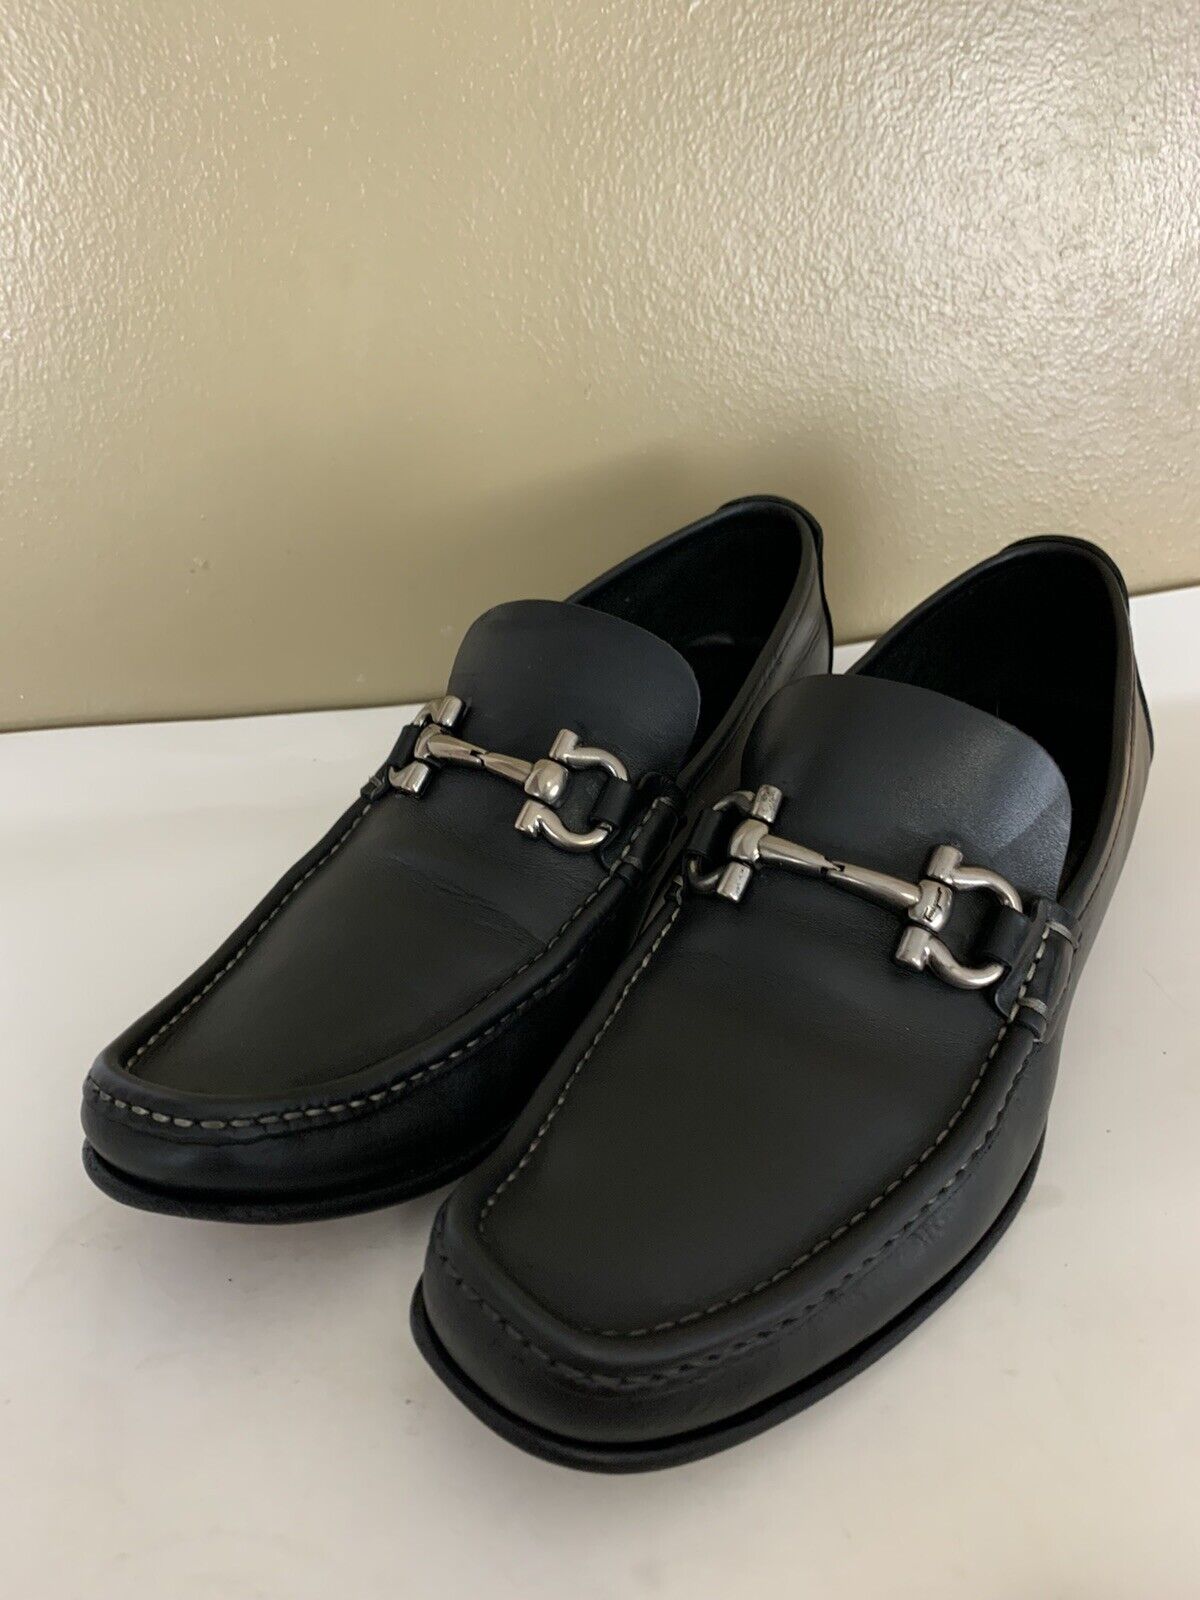 Mens Salvatore FERRAGAMO Black Leather Horsebit Loafer Size 8 D